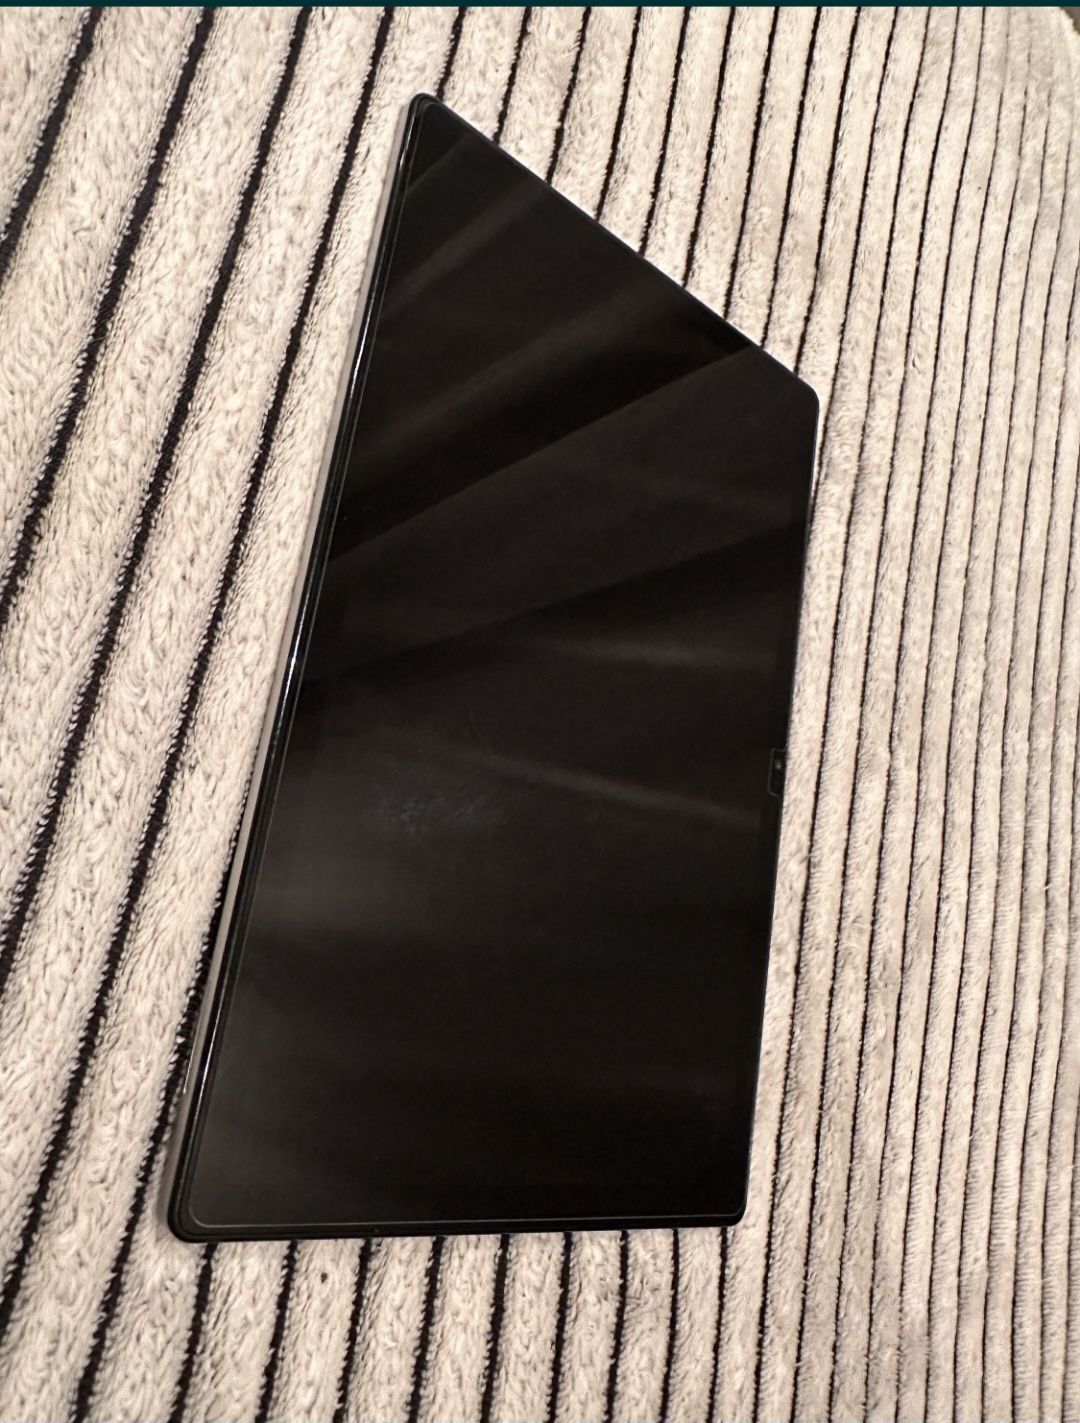 Samsung Galaxy tablet x205 a8 64 GB